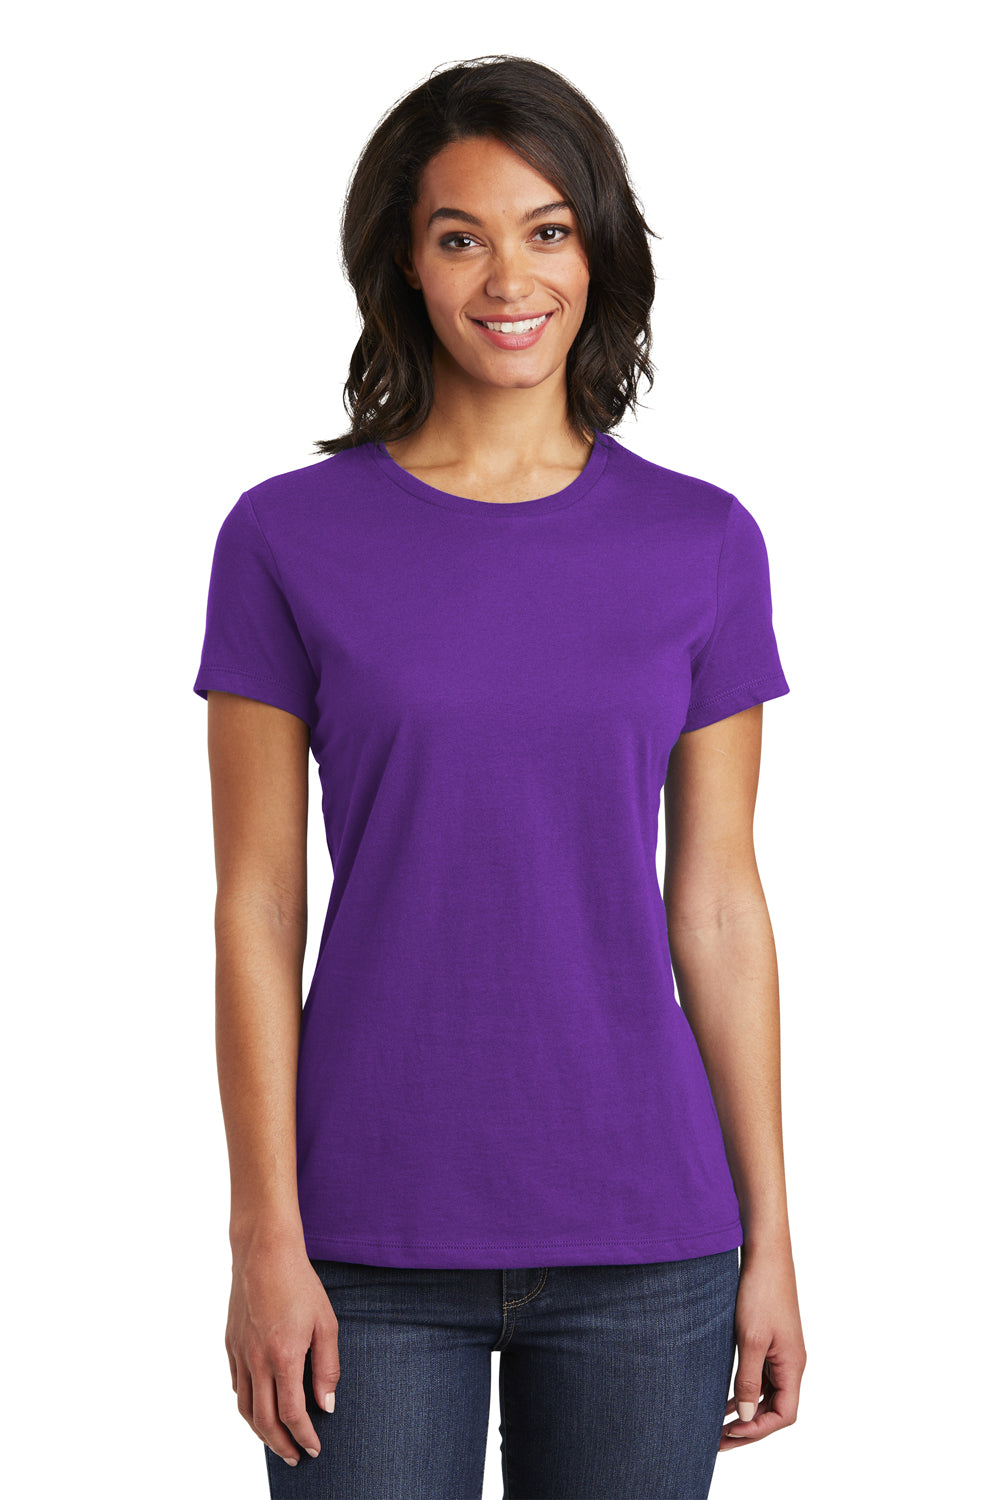 District DT6002 Womens Very Important Short Sleeve Crewneck T-Shirt Purple Front